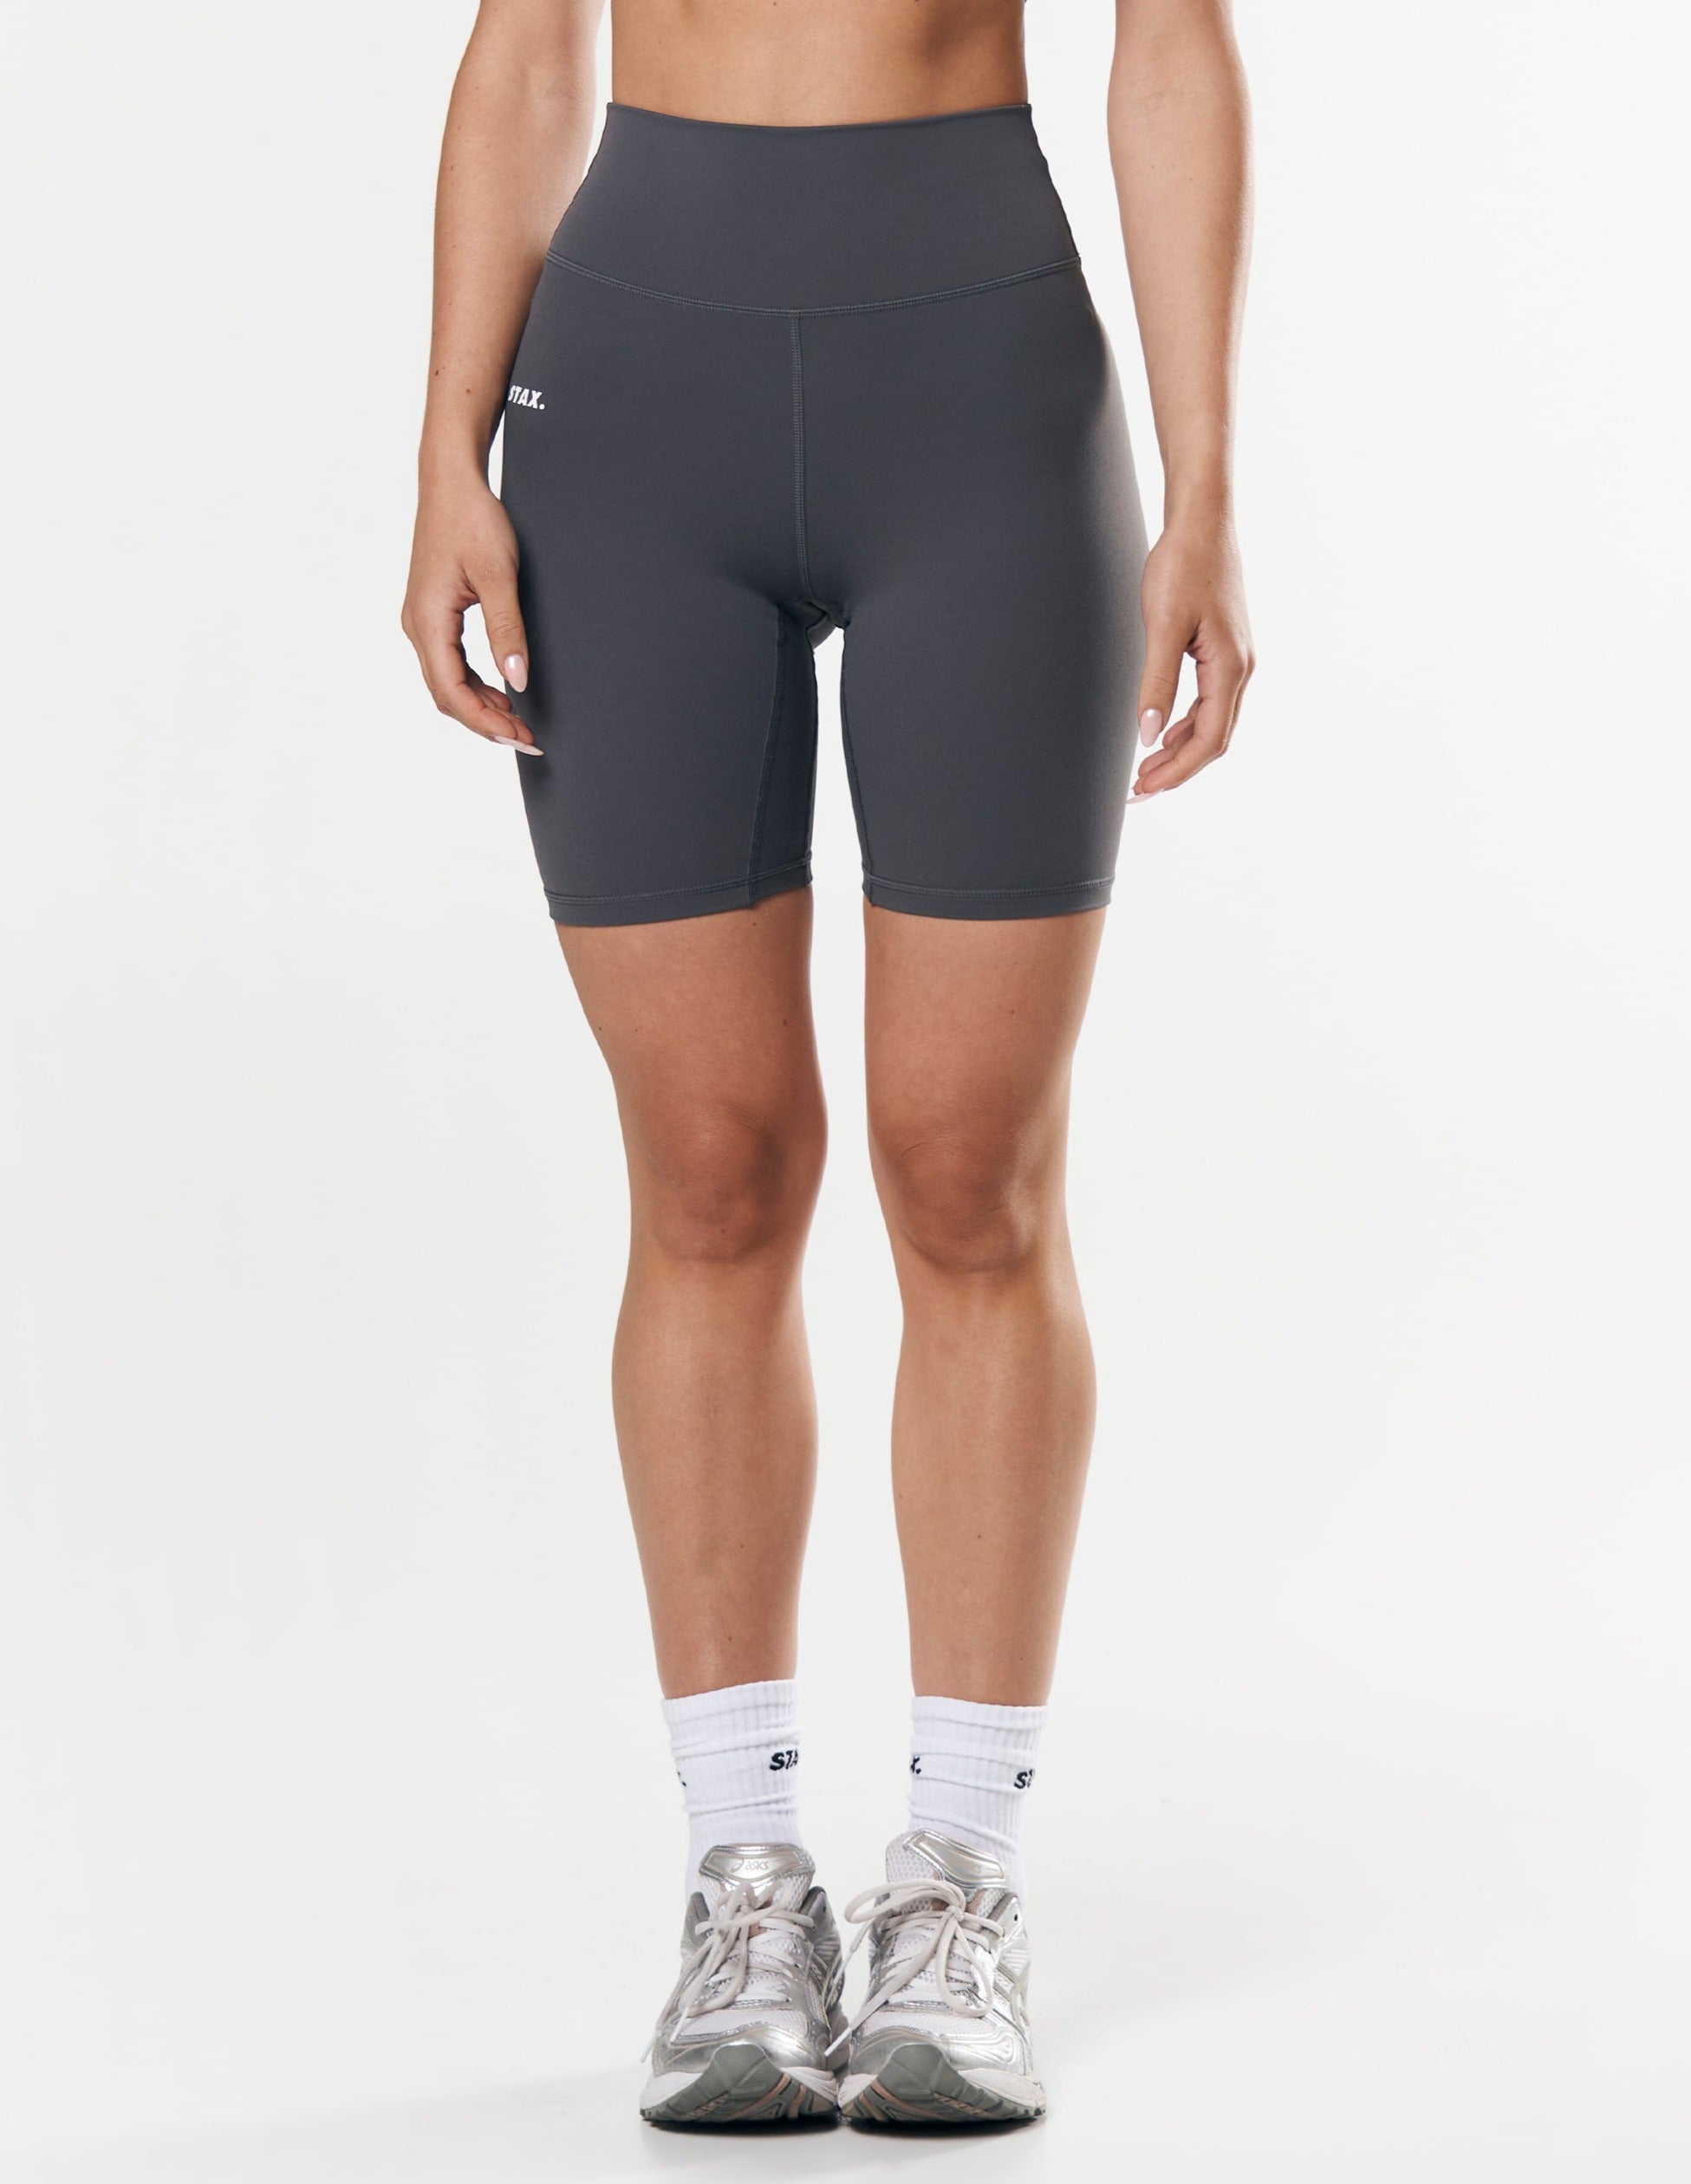 stax-original-bike-shorts-nandex-charcoal-grey